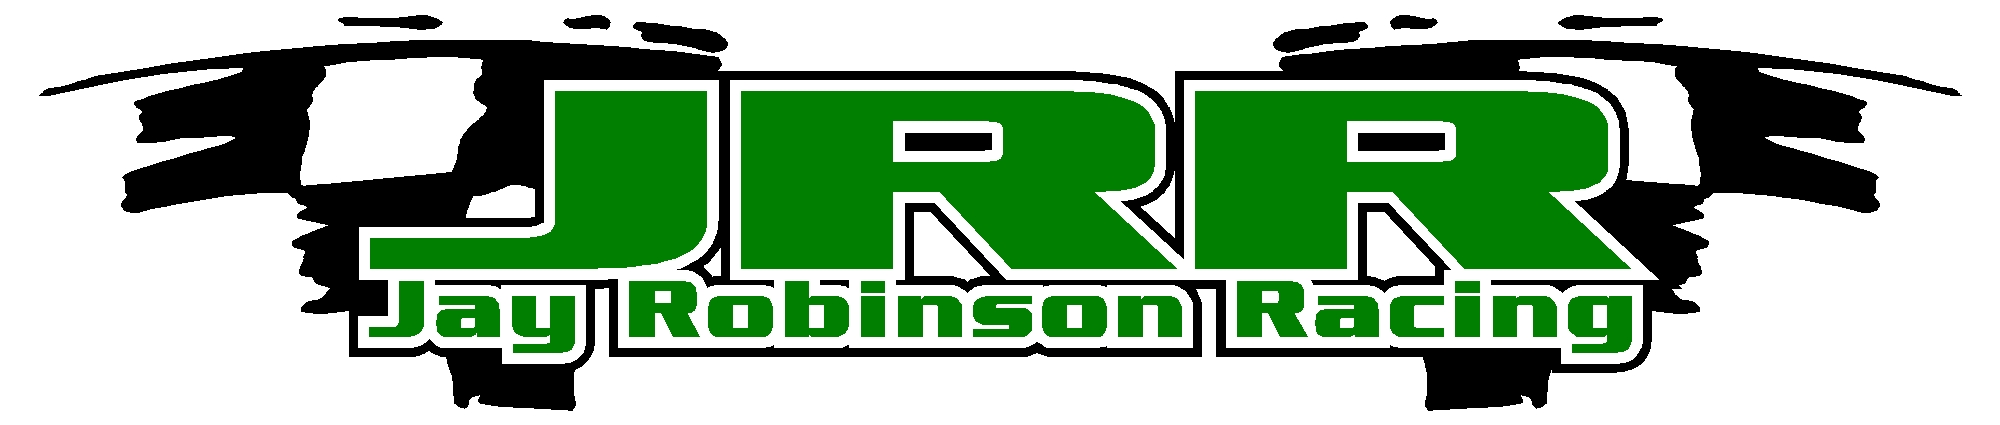 Jay Robinson Racing